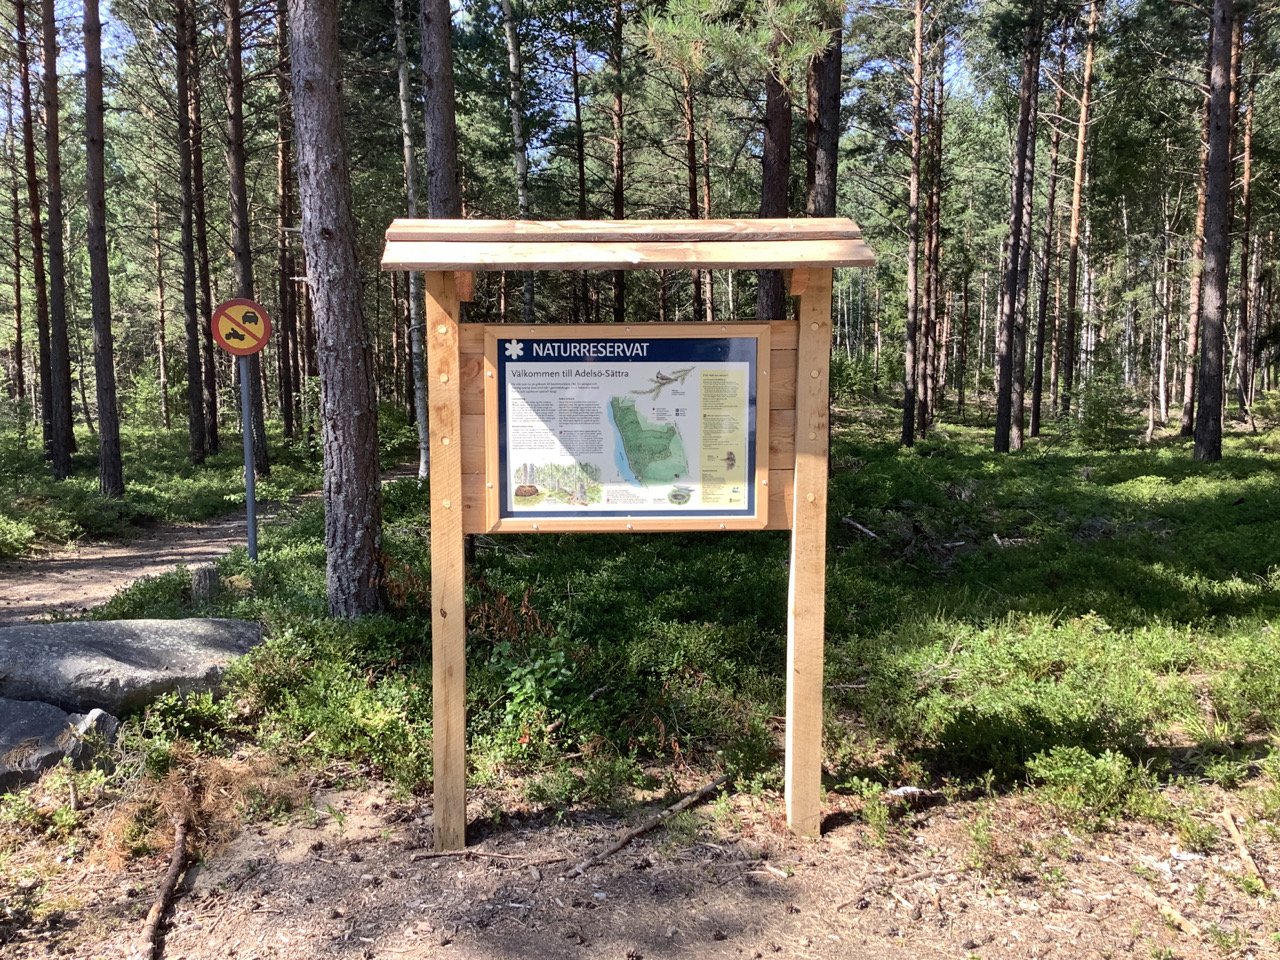 A sign provides information about the Adelsö-Sättra nature reserve.